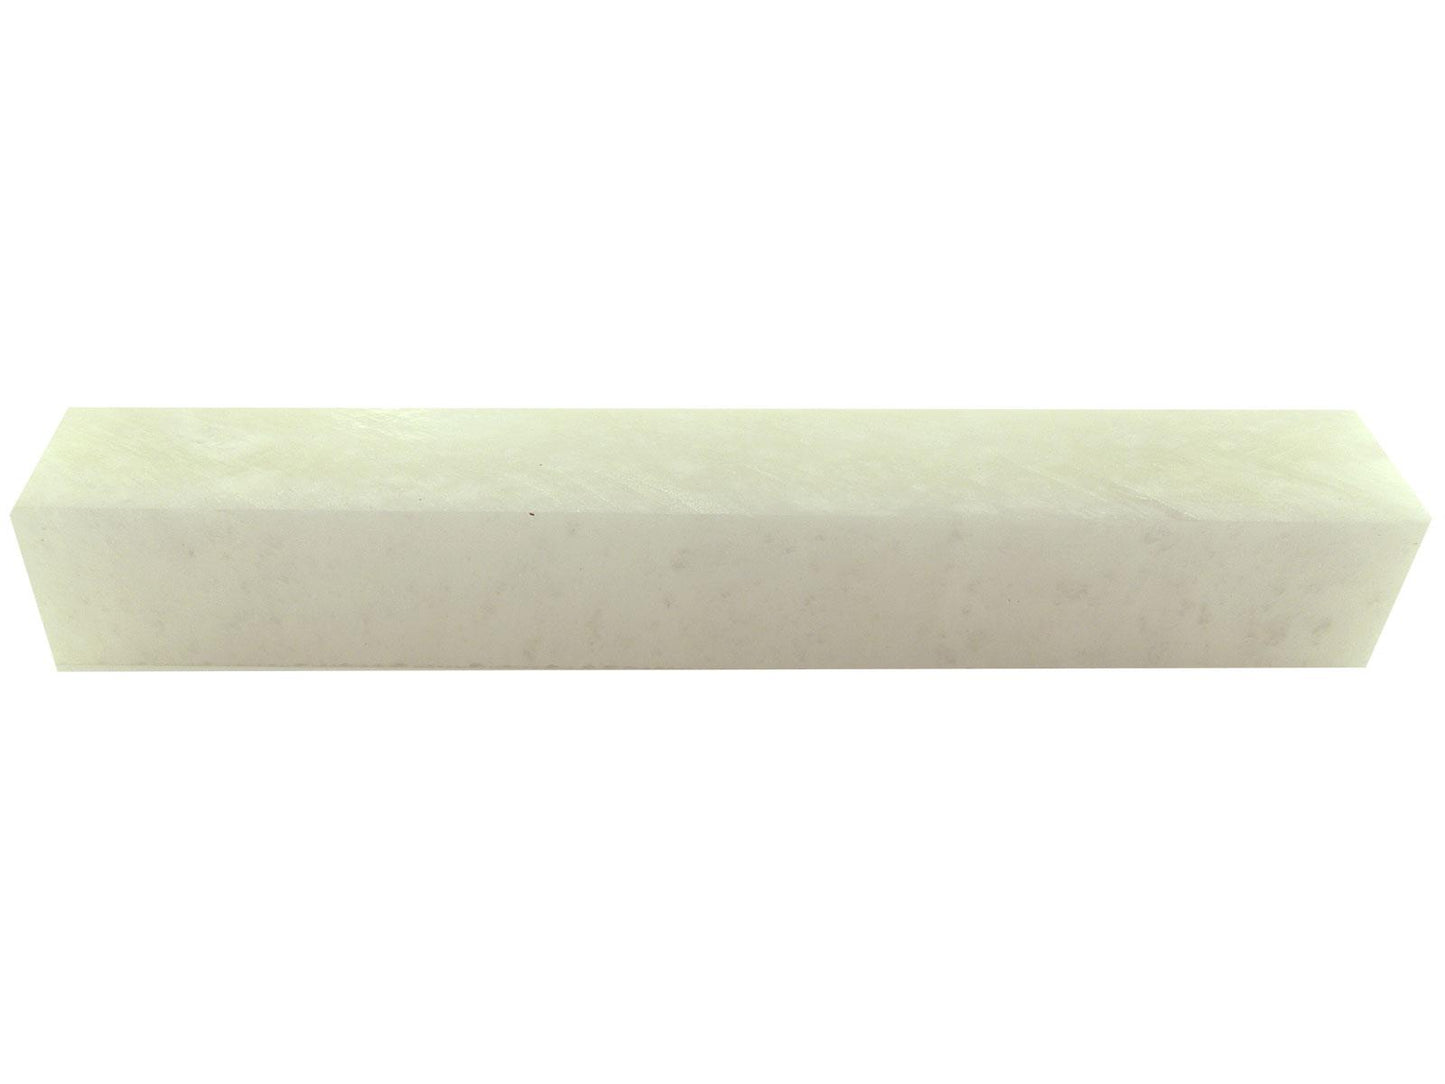 Turners' Mill Wedding White Ice Pearl Kirinite Acrylic Pen Blank - 150x20x20mm (5.9x0.79x0.79"), 6x3/4x3/4"